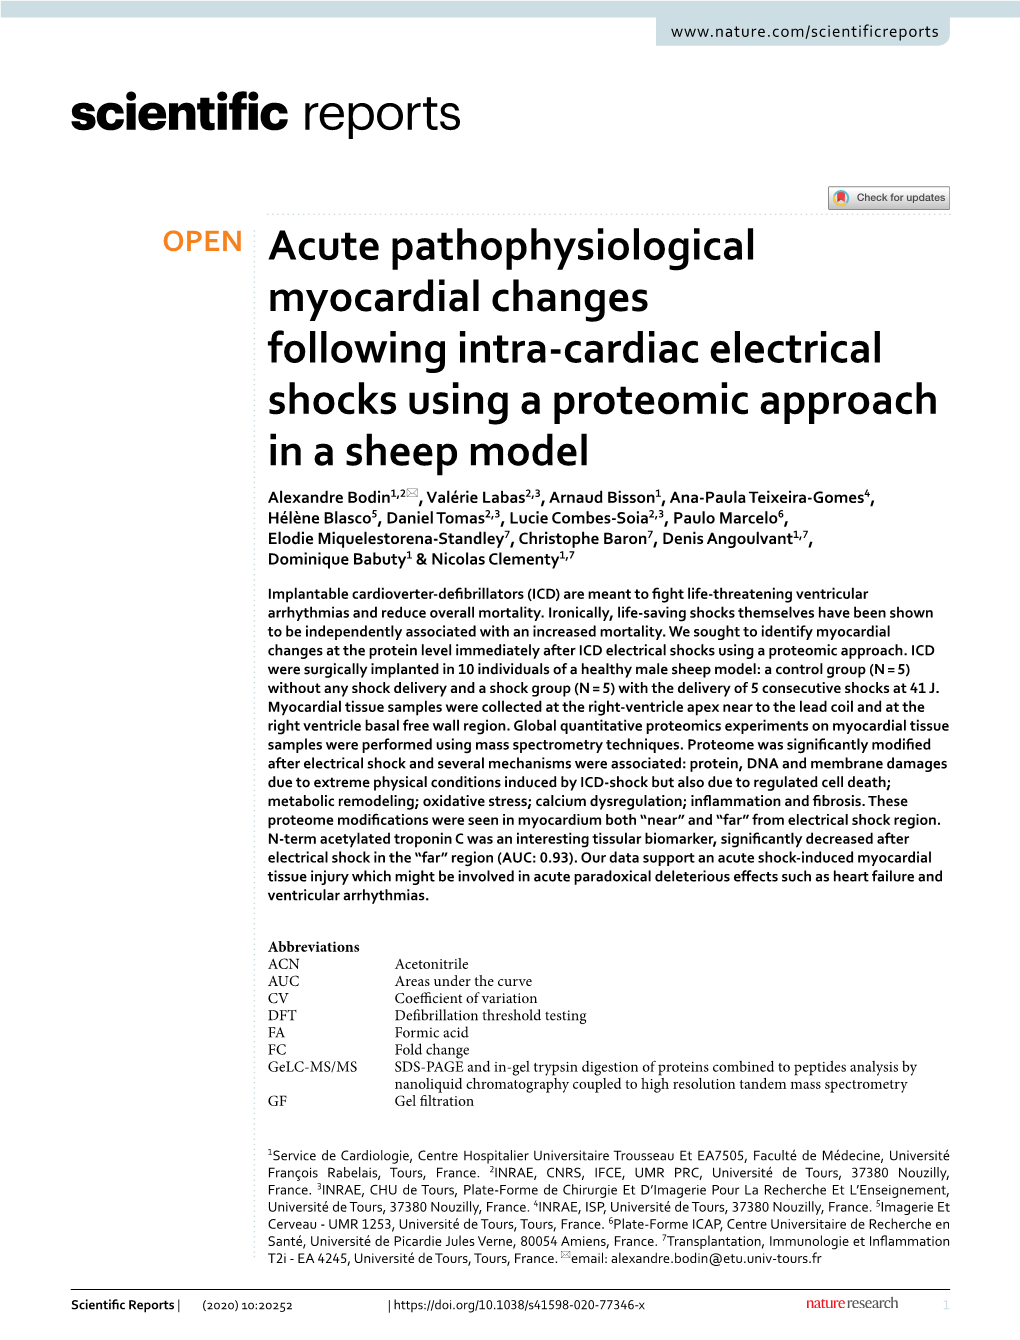 Acute Pathophysiological Myocardial Changes Following Intra-Cardiac